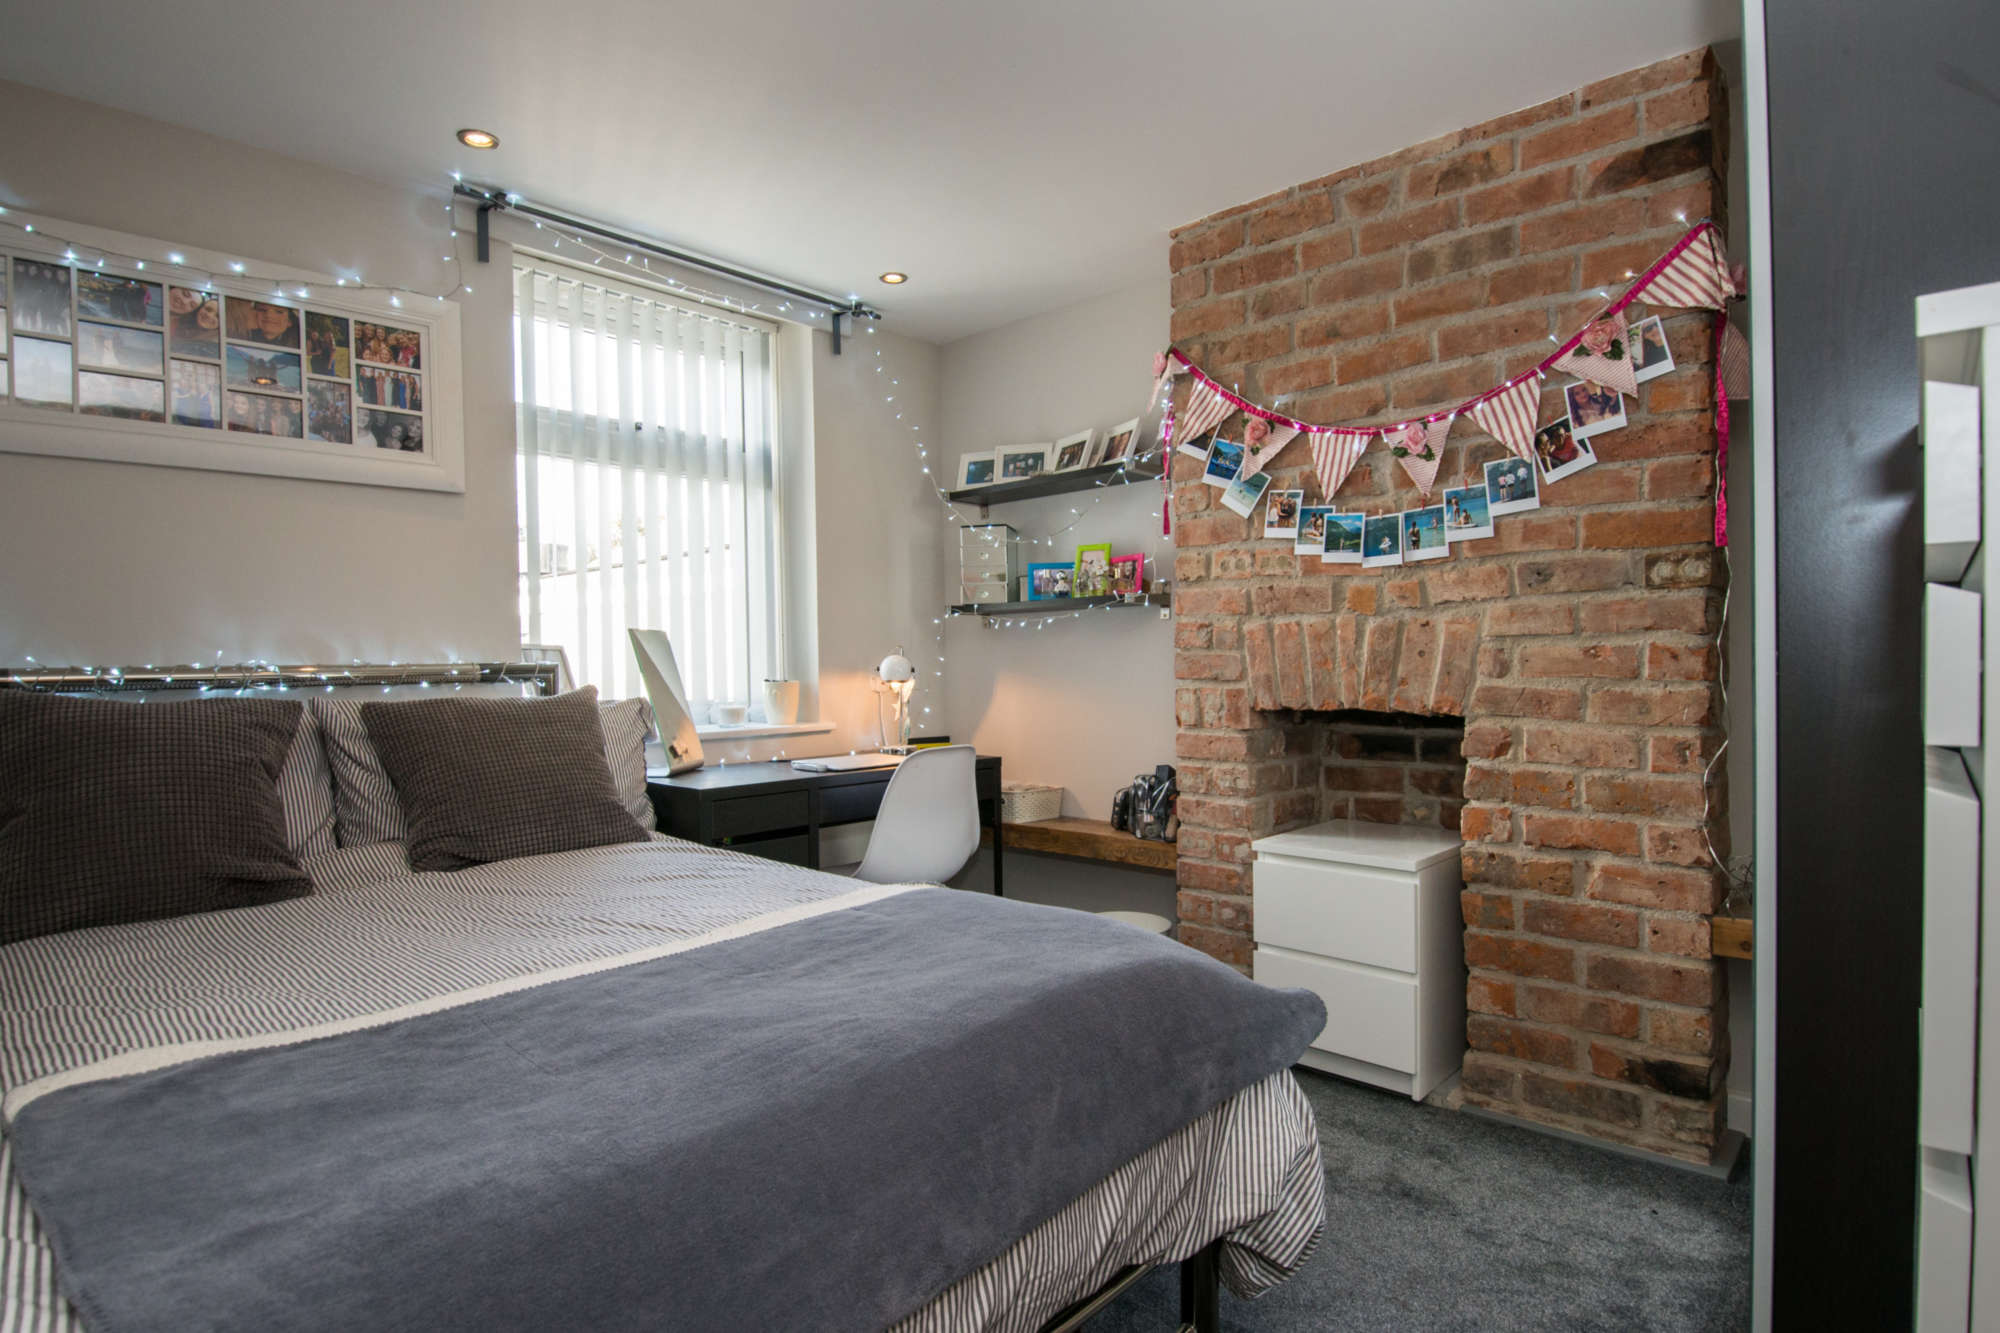 Bedroom with exposed brickwork